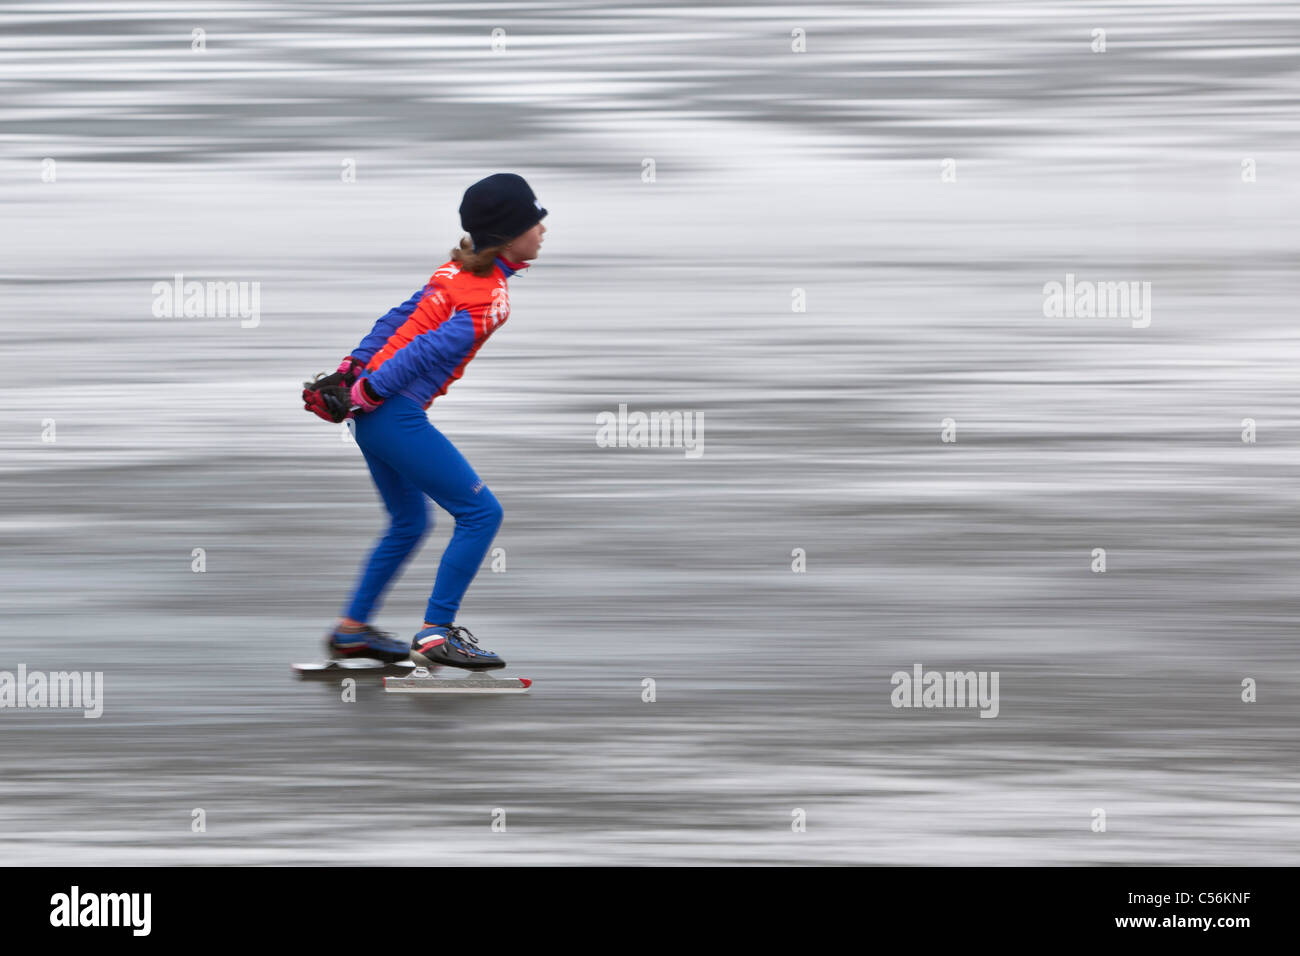 The Netherlands, Ankeveen. Girl ice skating. Motion blurred. Stock Photo